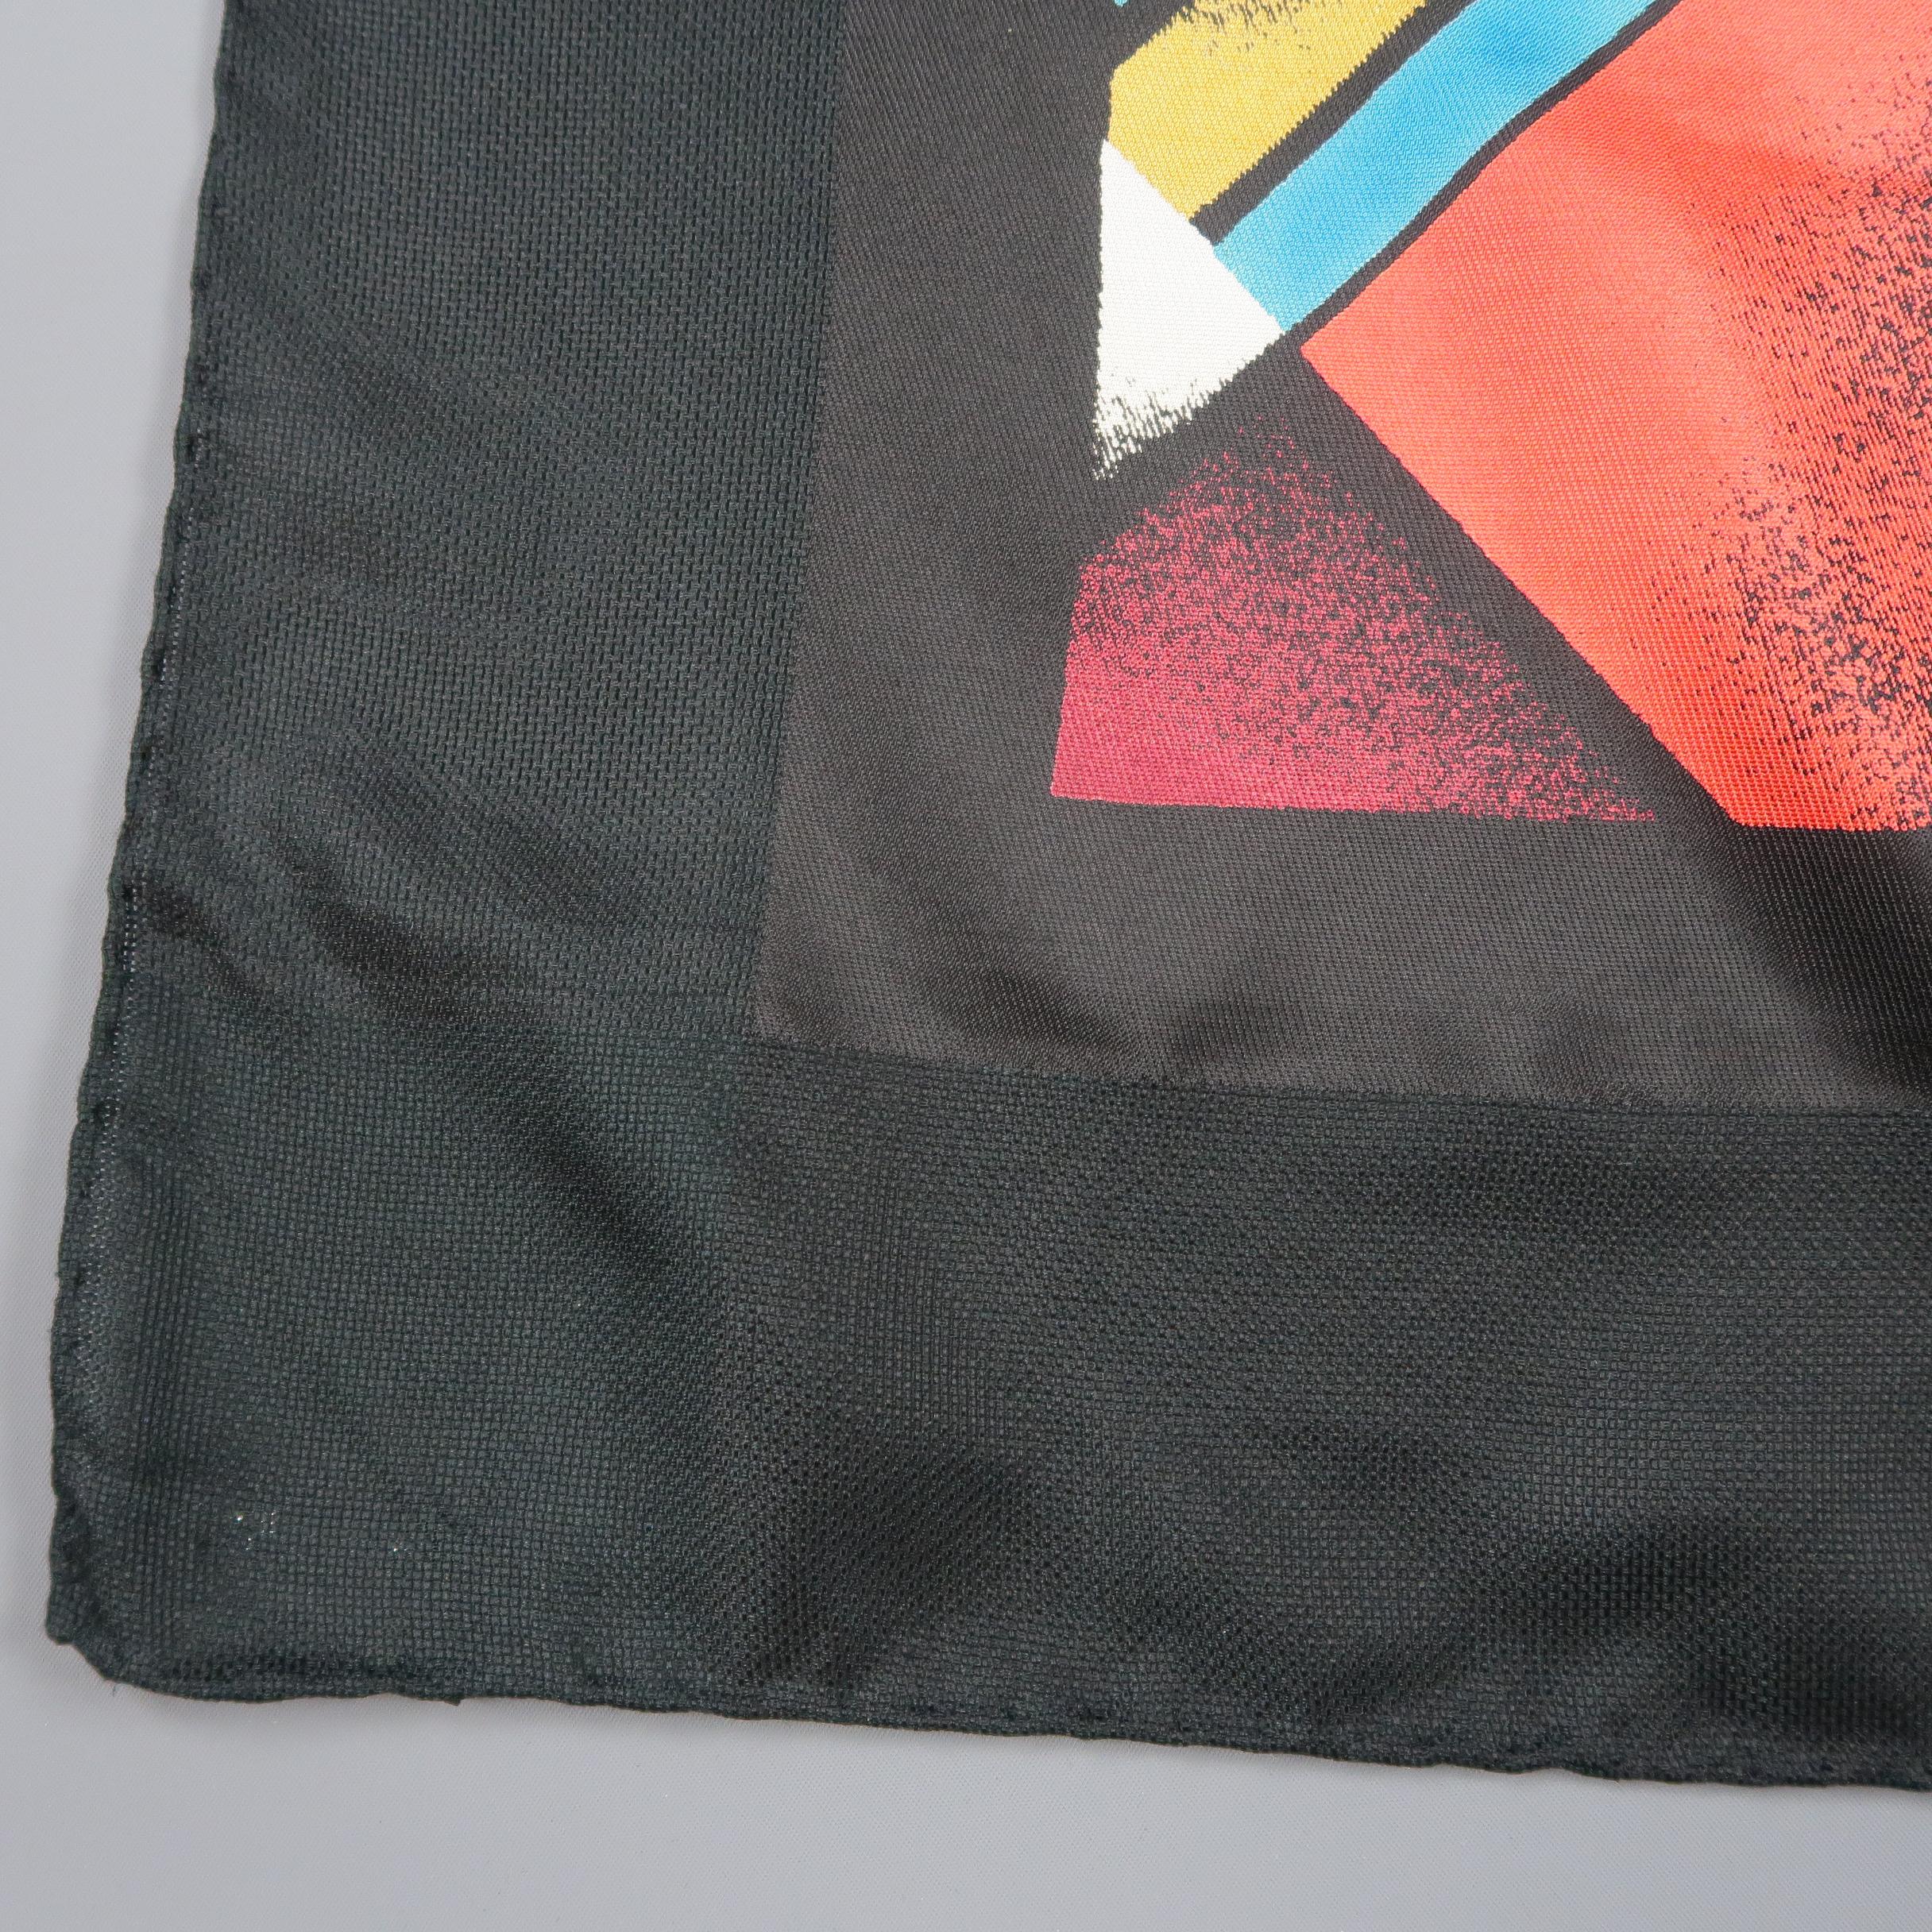 CHARLES JOURDAN Black Red Teal Yellow & Beige Geometric Art Silk Scarf Shawl 4